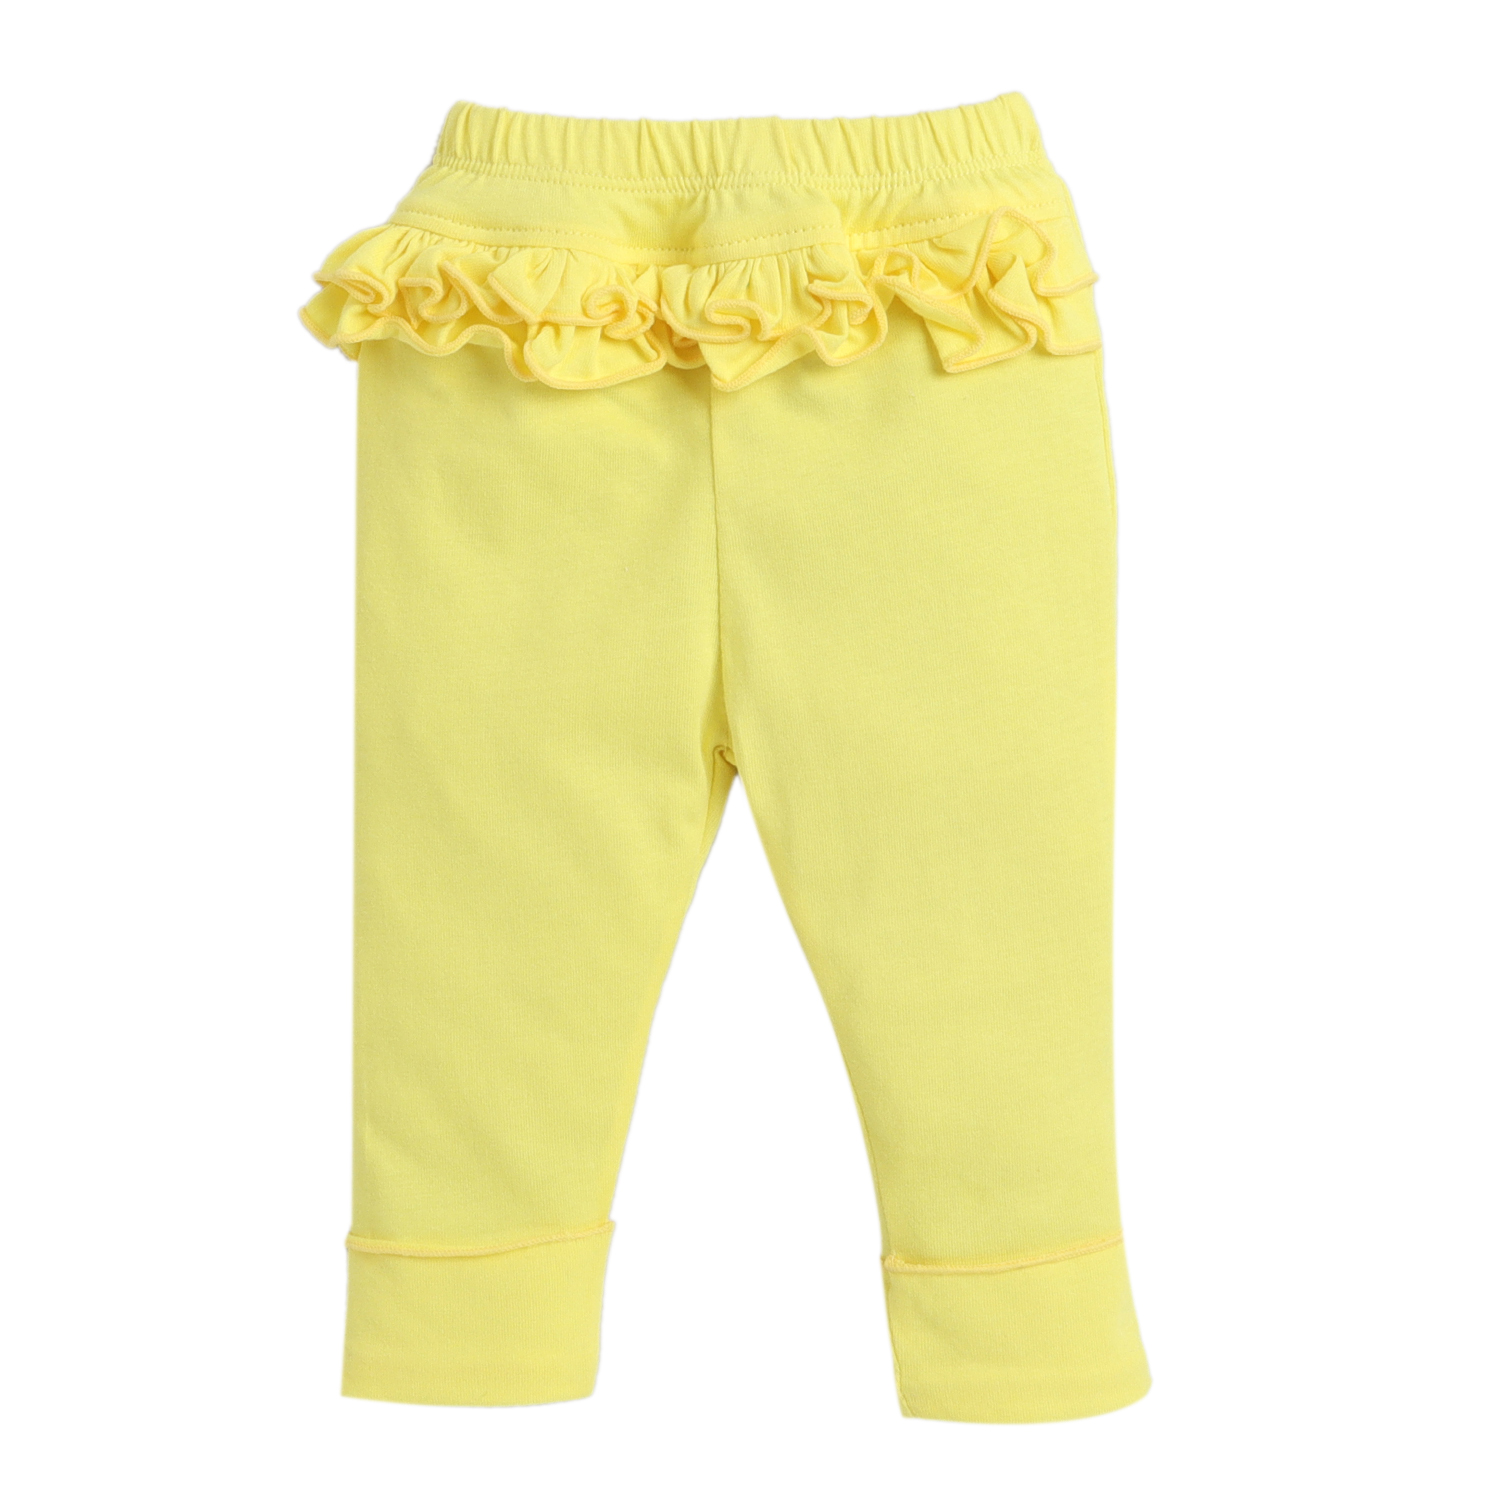 Vivian's Fashions Long Leggings - Girls, Cotton (Yellow, Medium) -  Walmart.com